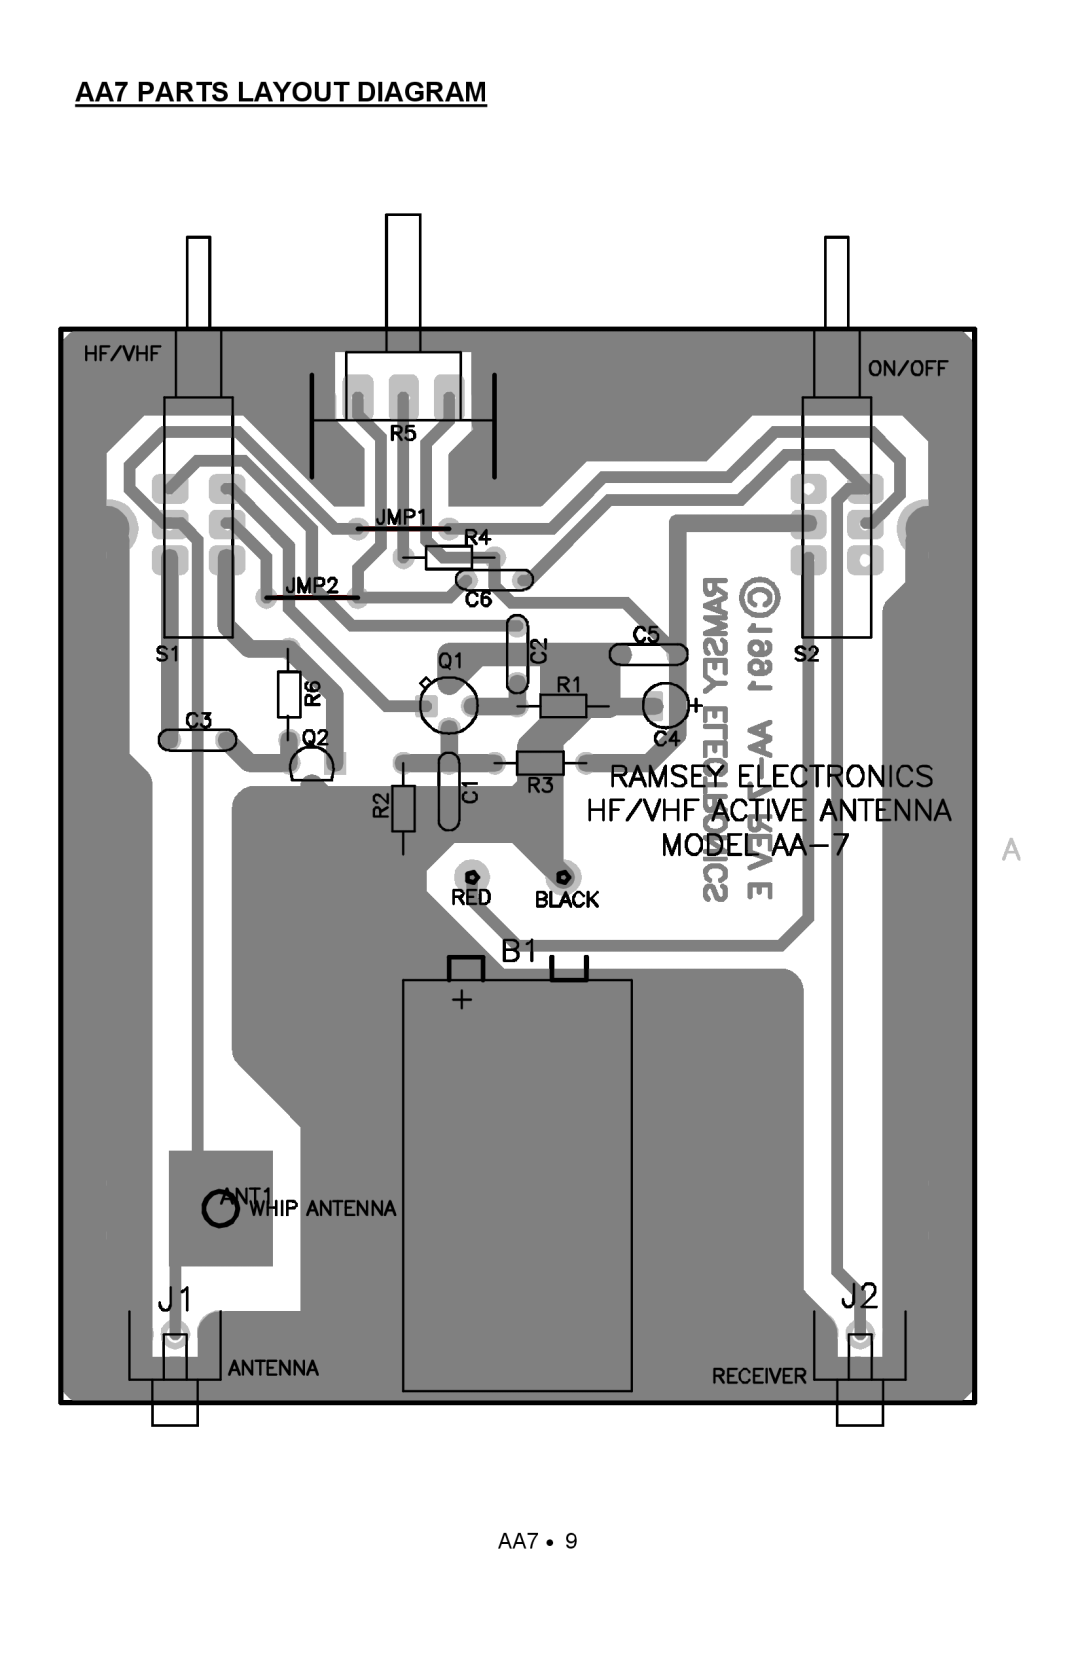 Ramsey Electronics manual AA7 PARTS LAYOUT DIAGRAM 